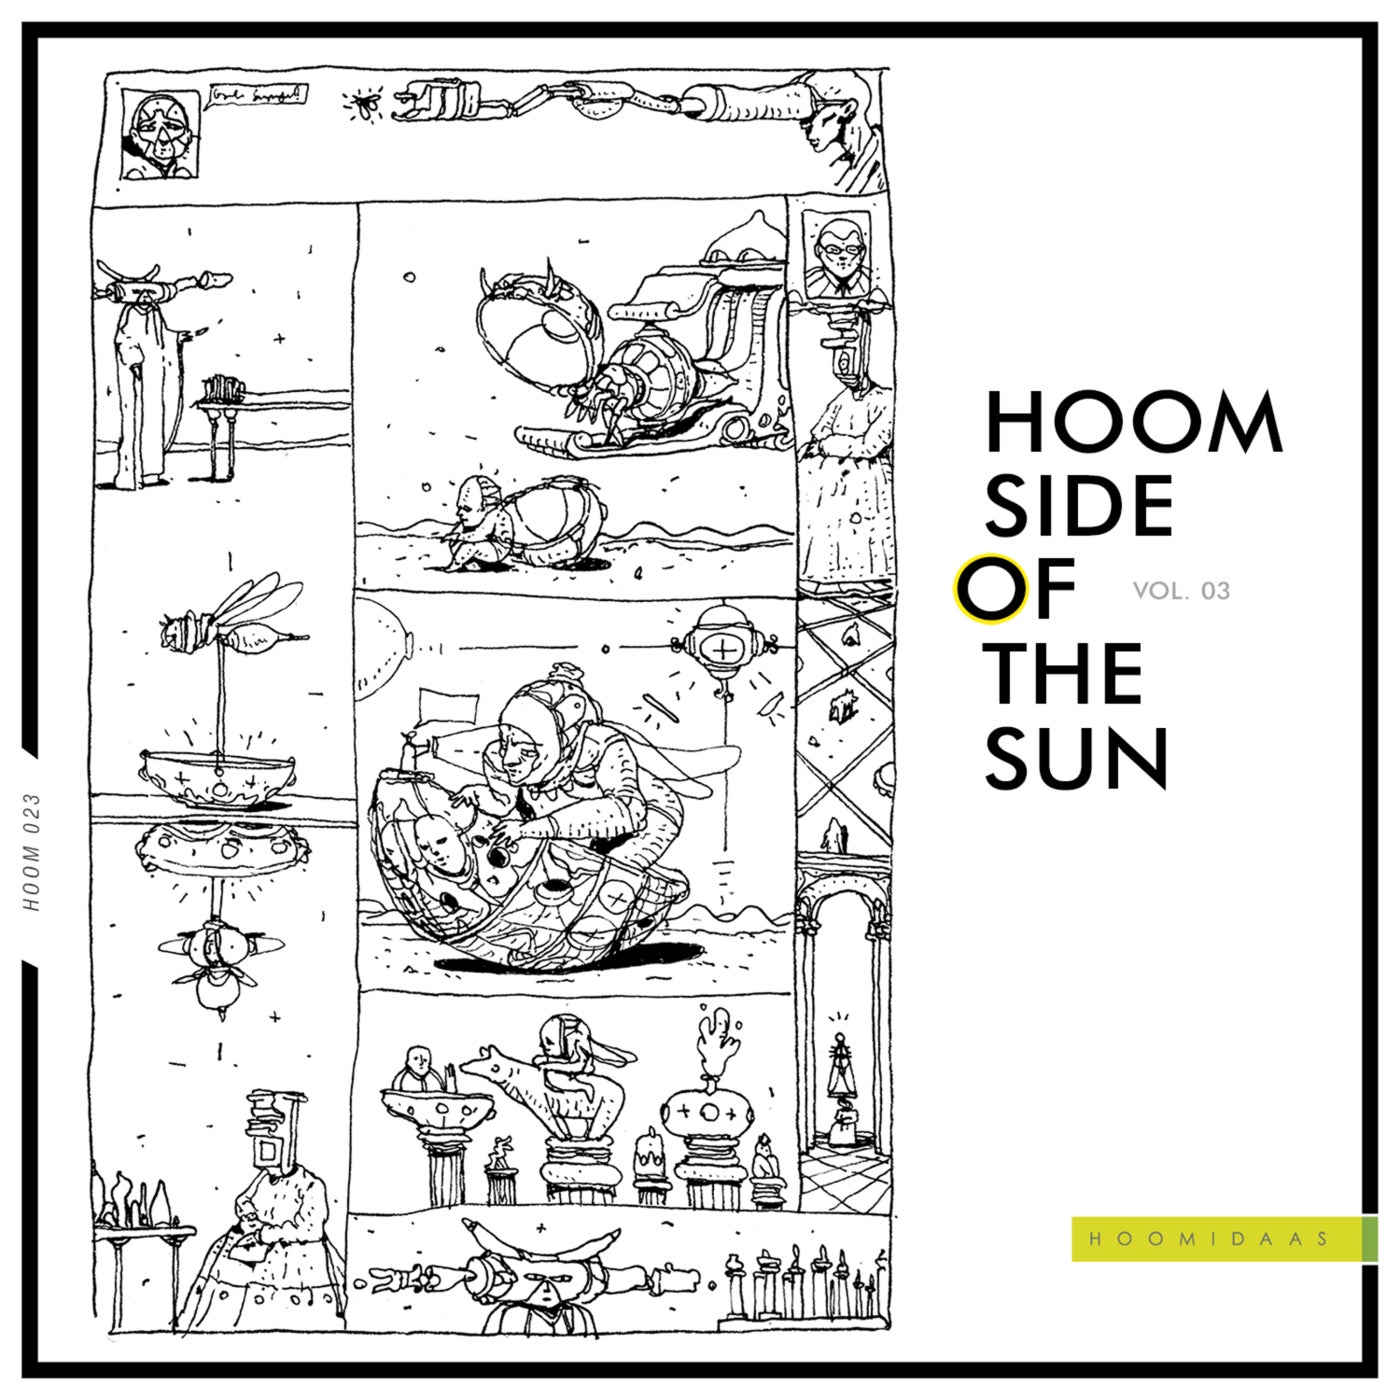 Hoom Side of the Sun, Vol. 03